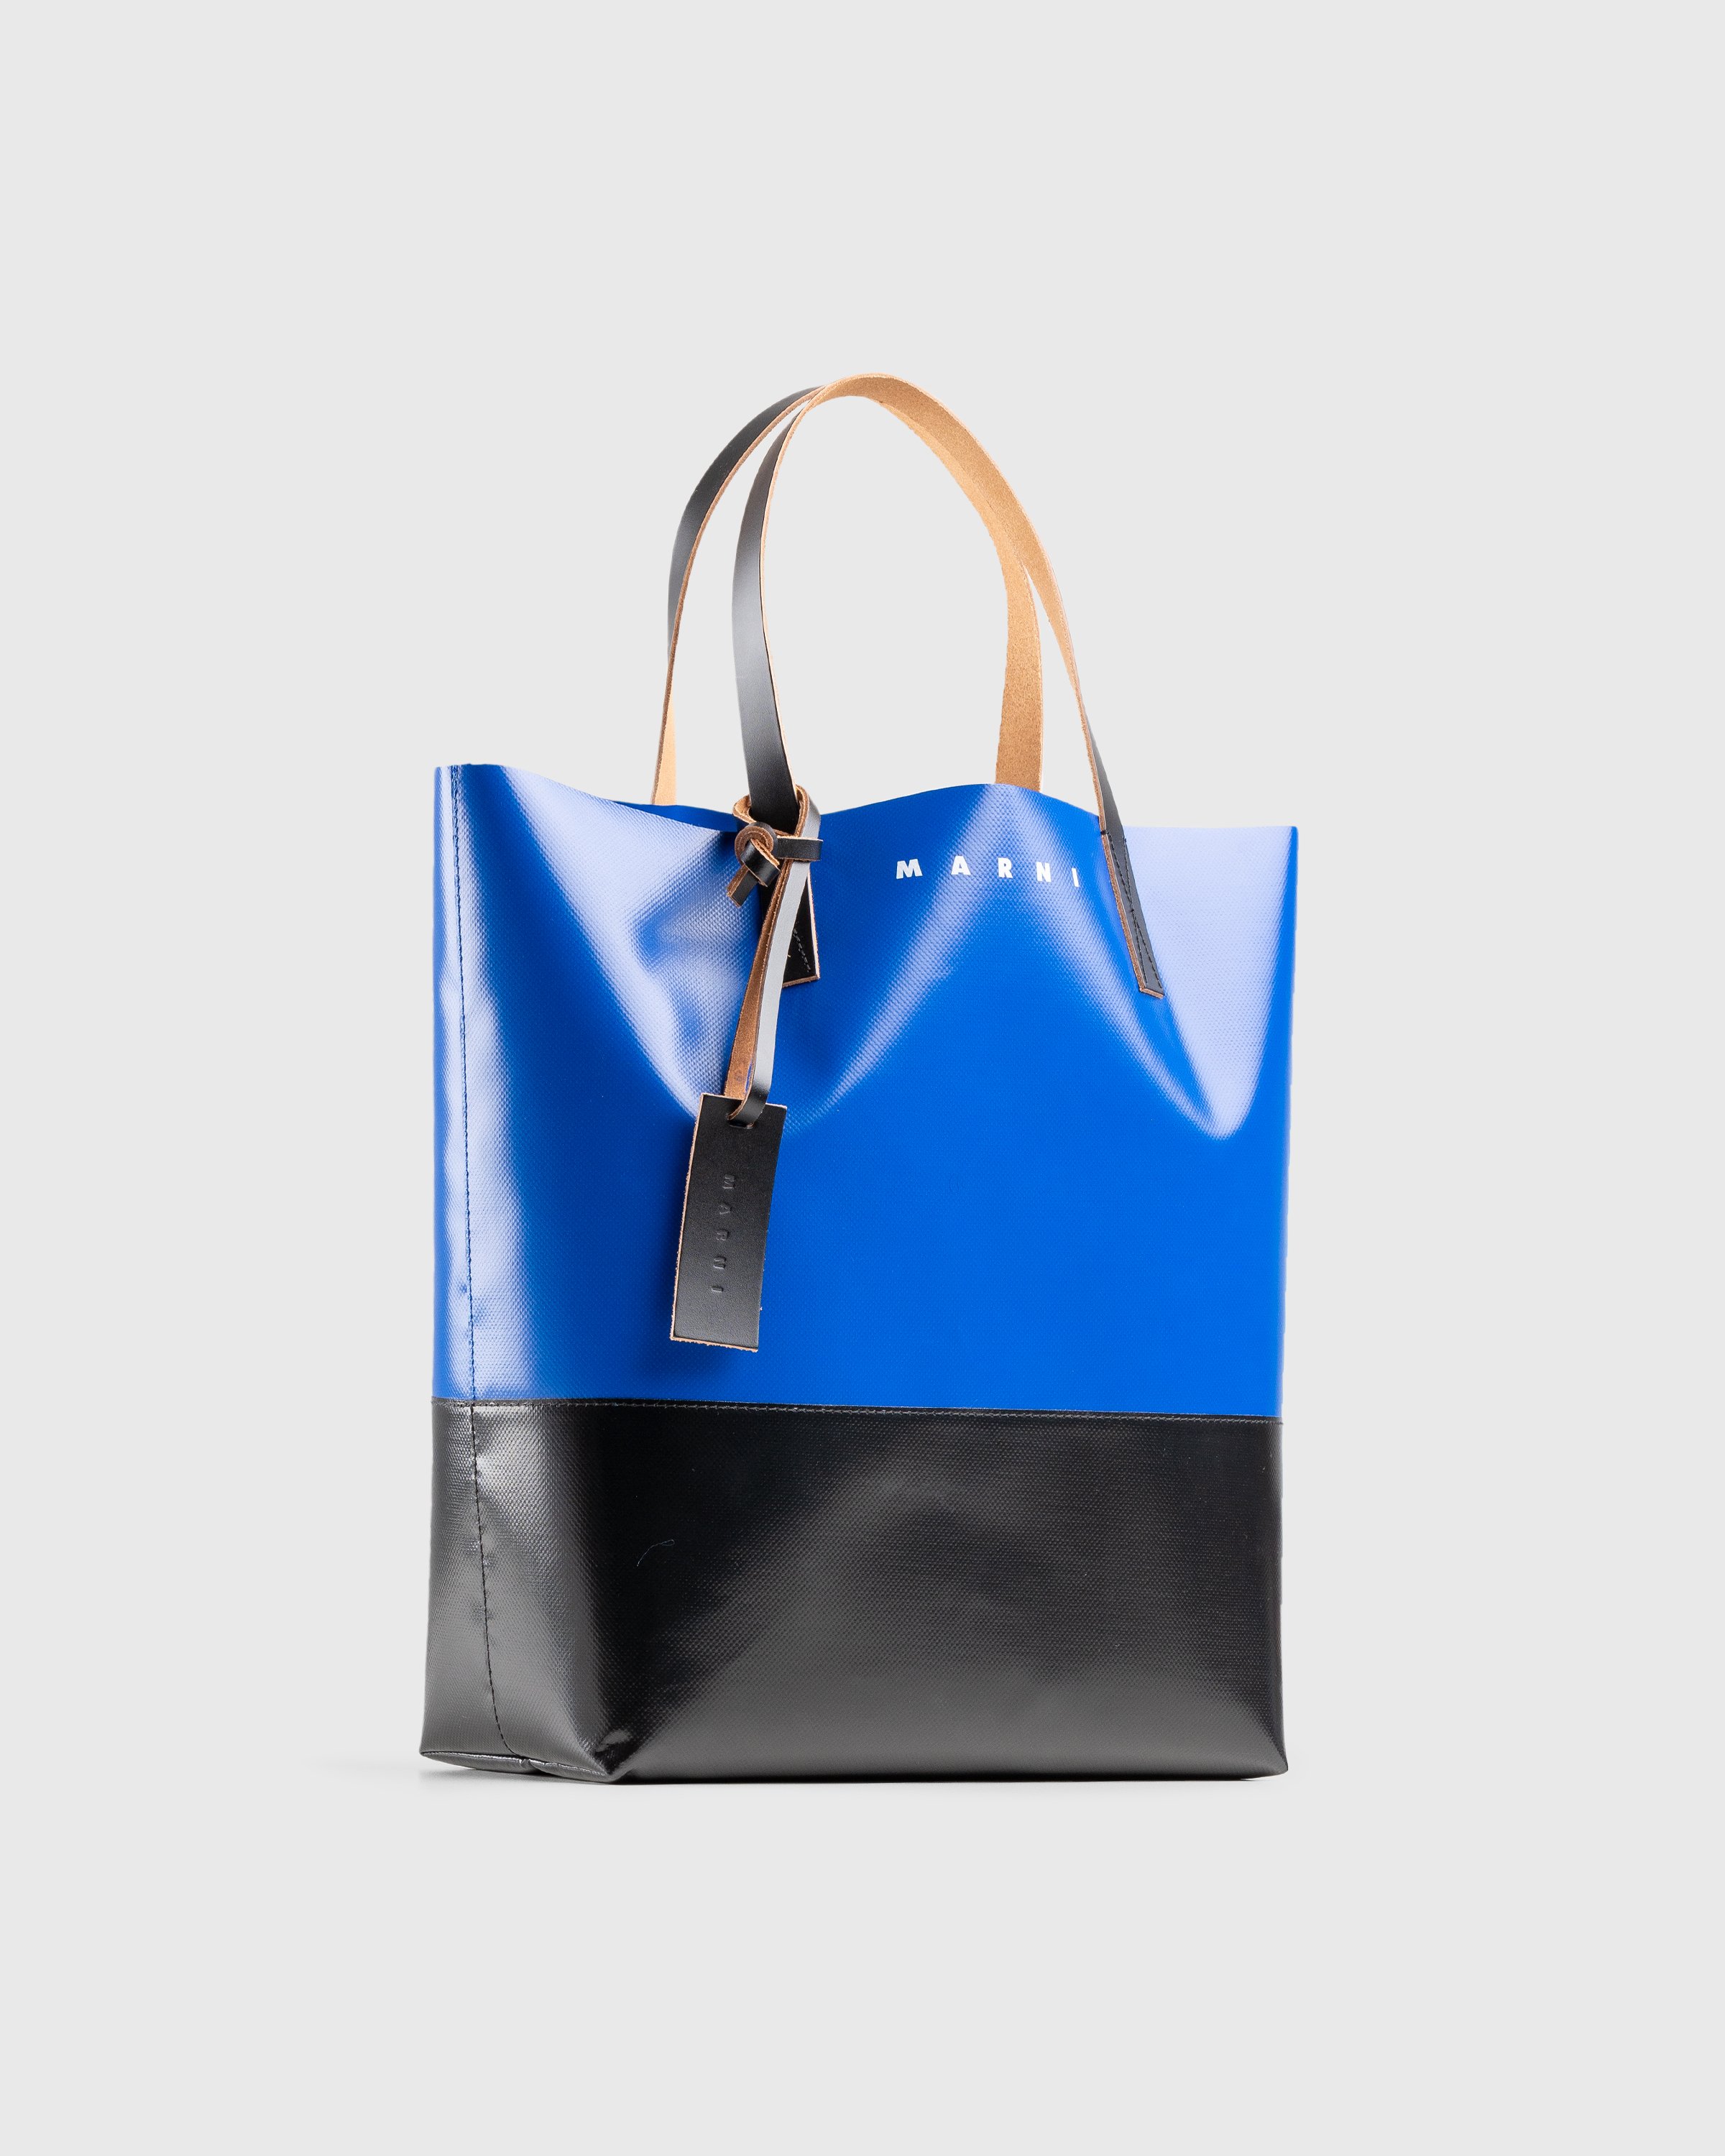 Marni - Tribeca Two-Tone Tote Bag Blue - Accessories - Blue - Image 2